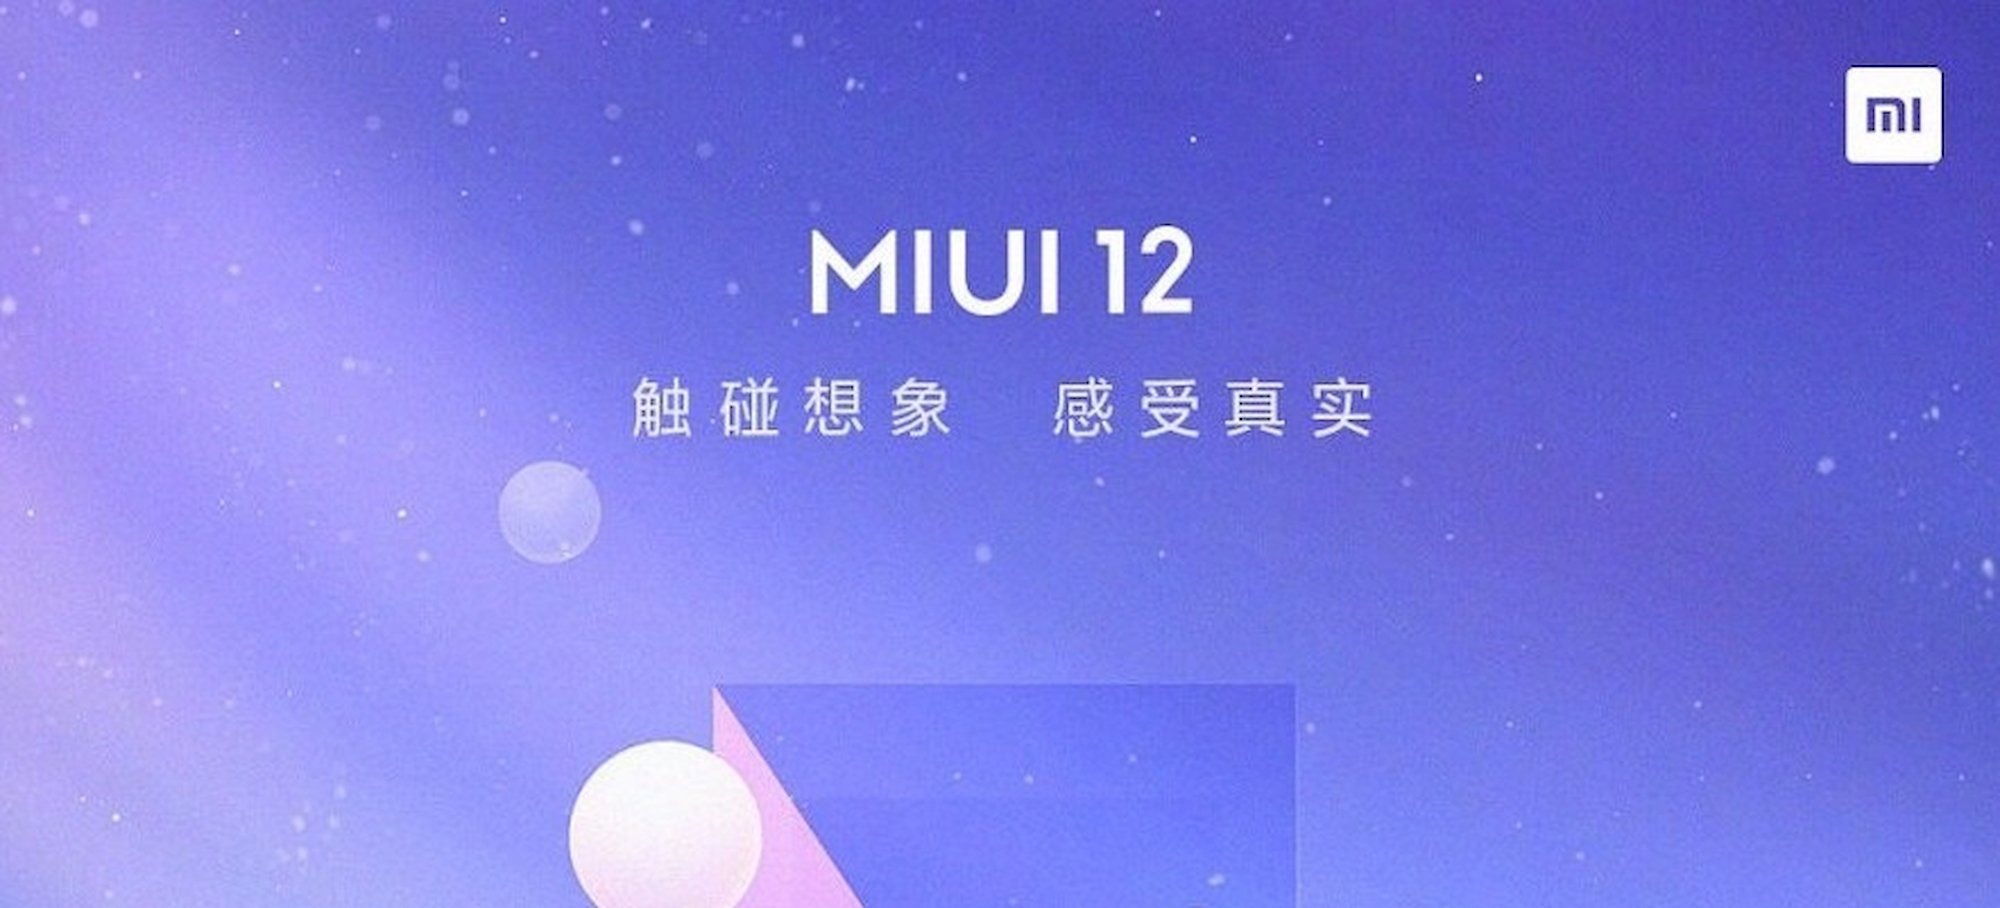 MIUI 12: قائمة الأجهزة التي ستتلقى واجهة Xiaomi الجديدة 15